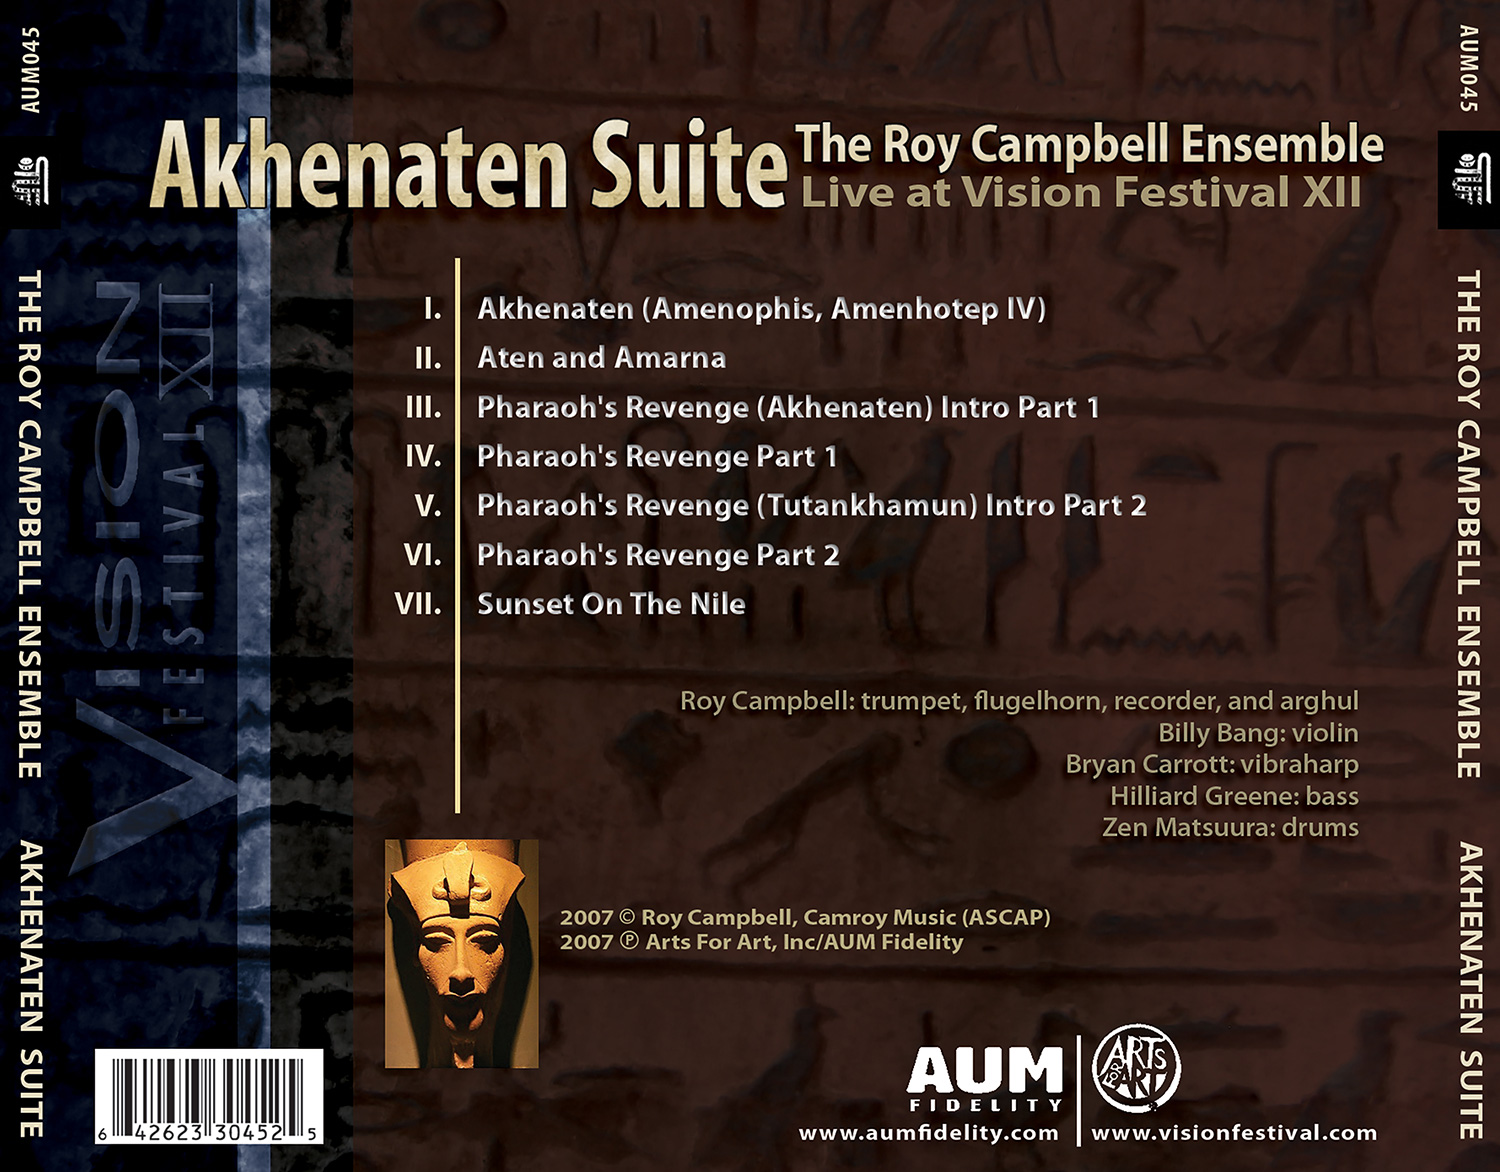 j-card for Roy Campbell Ensembel's cd Akhenaten Suite Live at Vision Festival 18